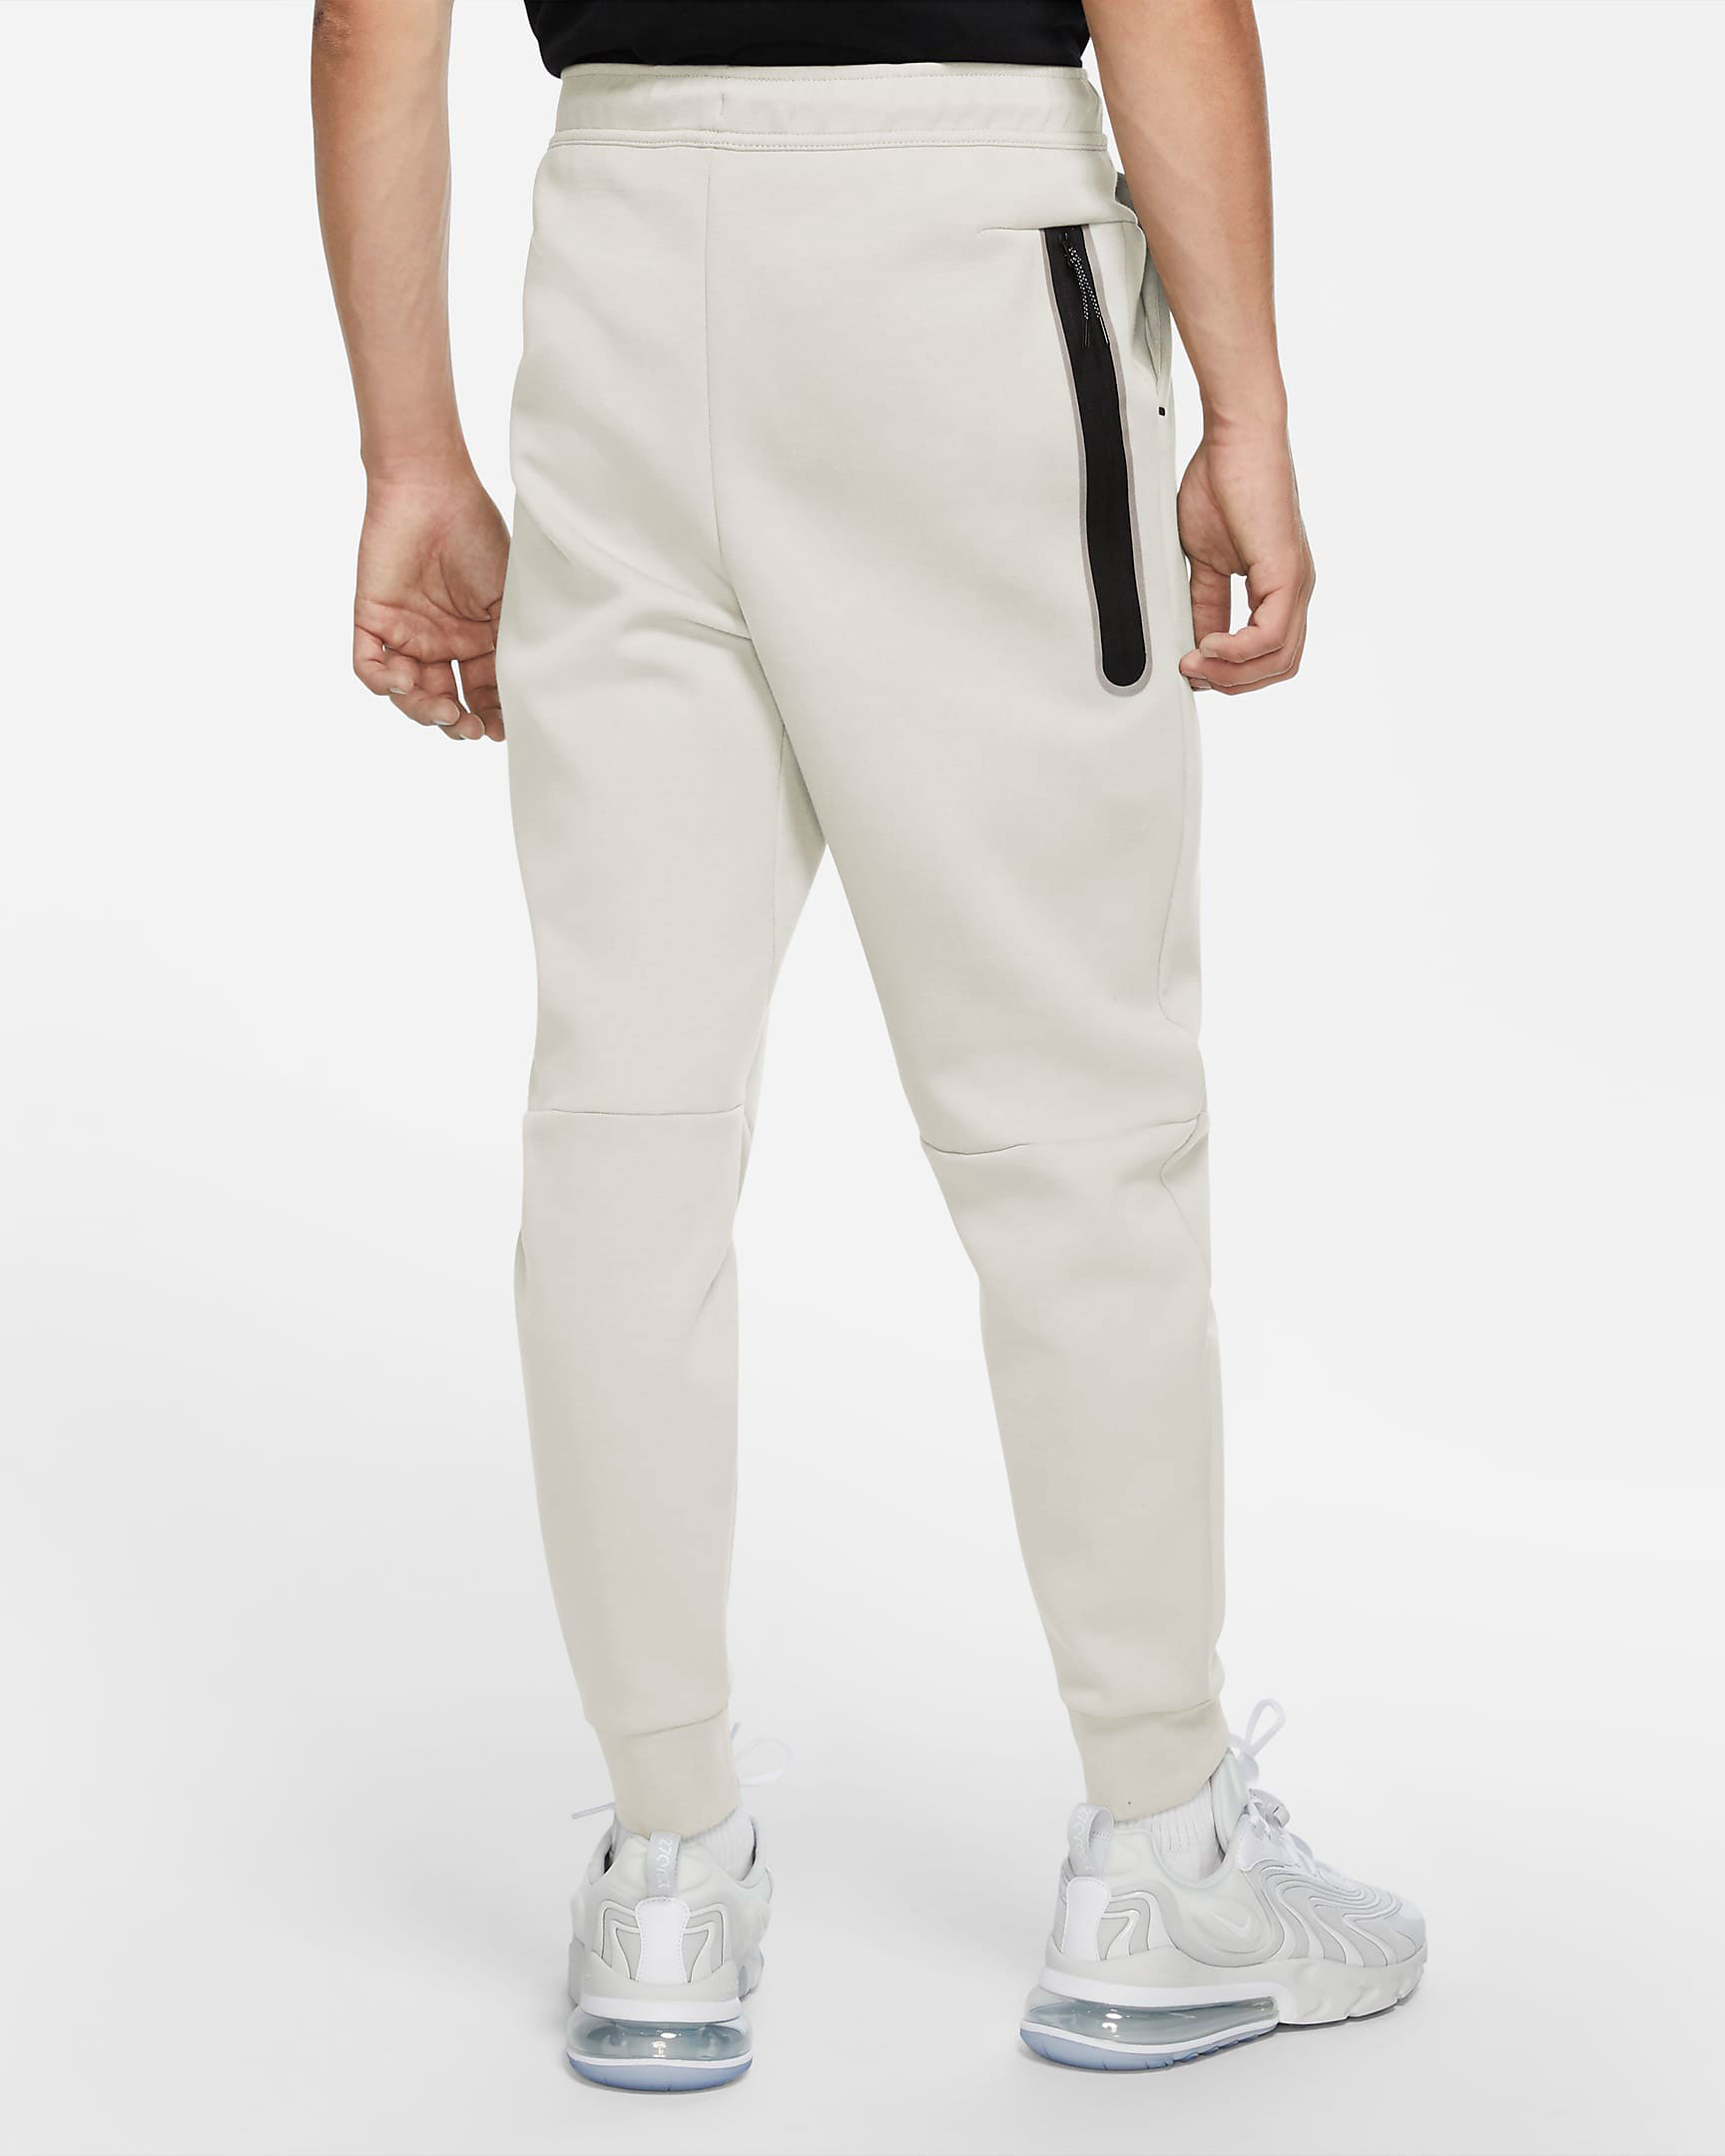 Air Jordan 5 Off White Sail Shirts Hats Clothing | SneakerFits.com